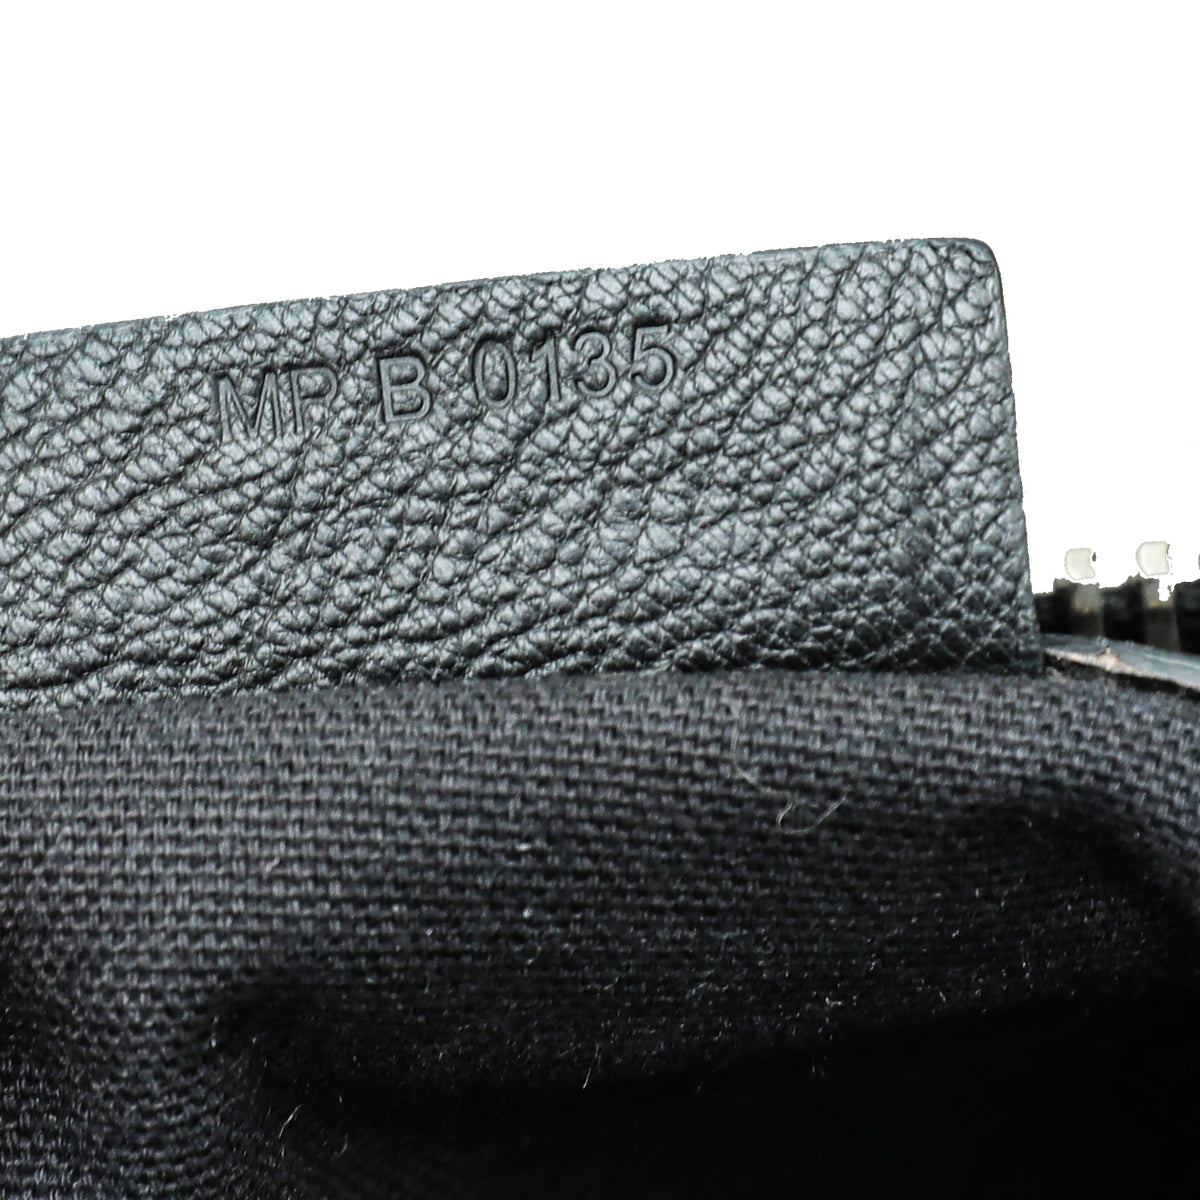 Givenchy Black Antigona Tote Bag